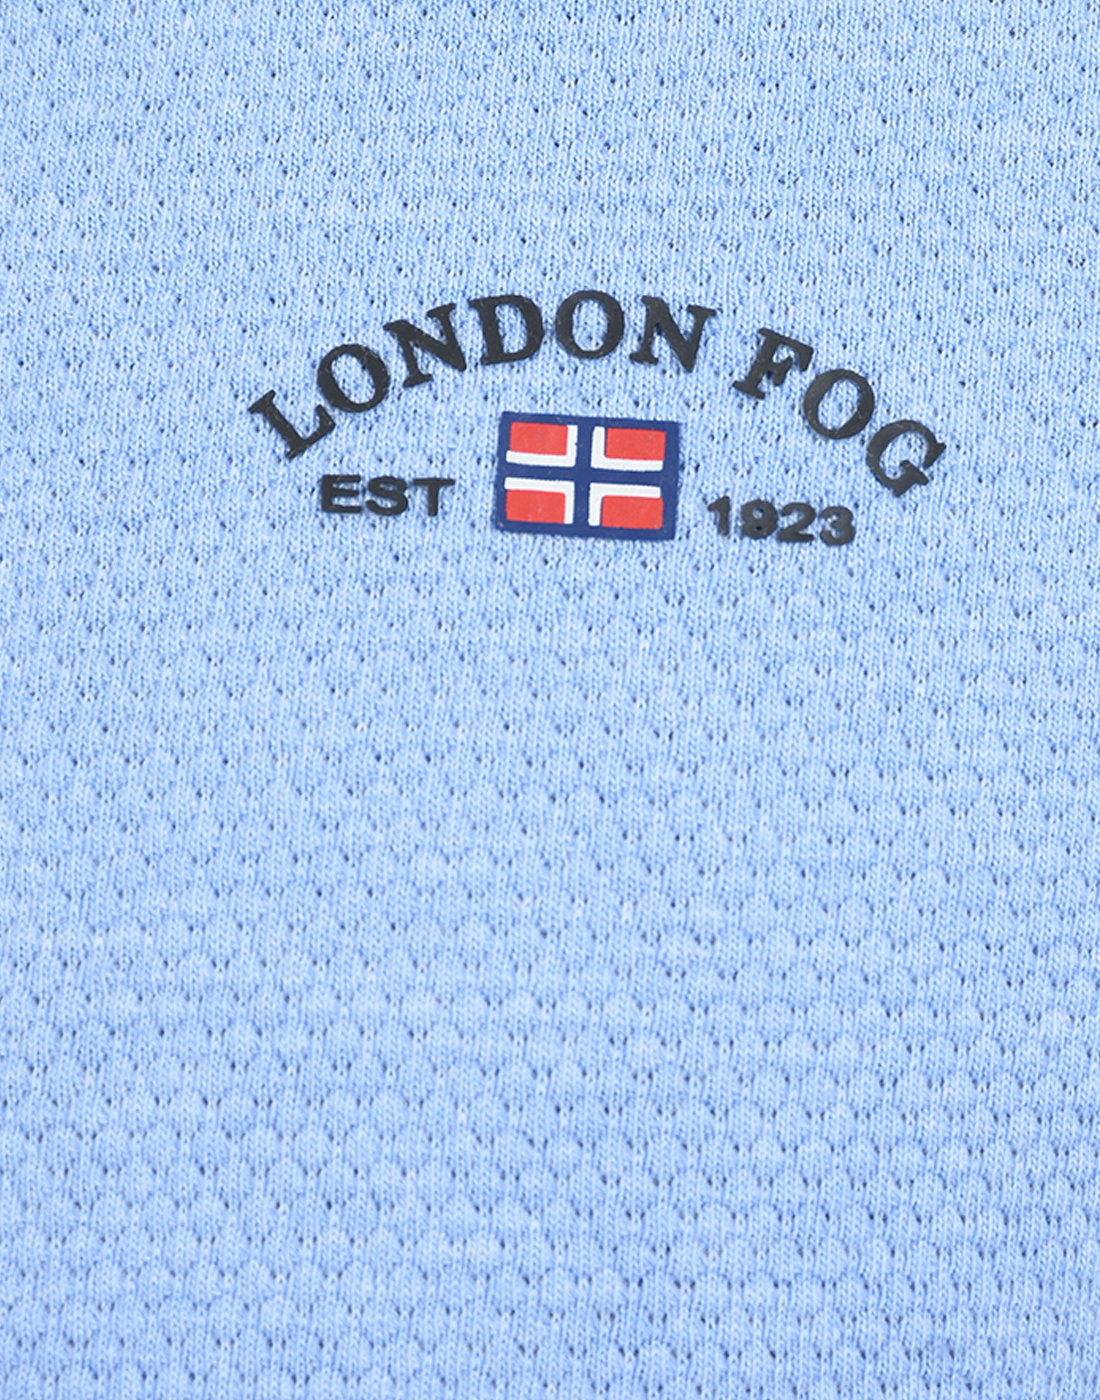 London Fog Men Blue T-Shirt